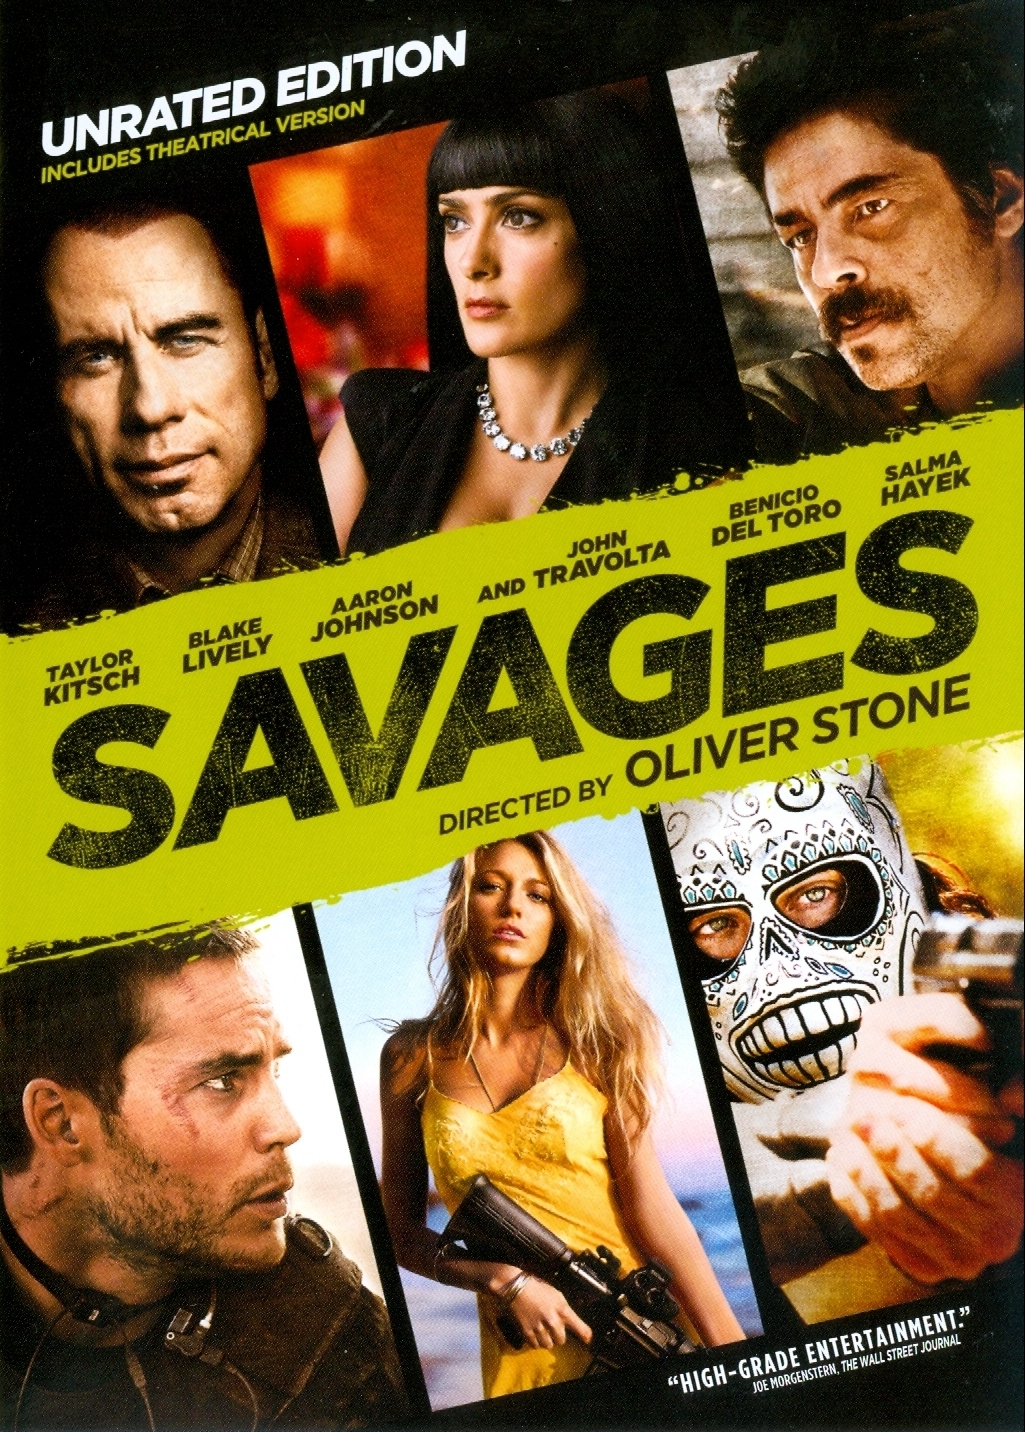 savages movie cast